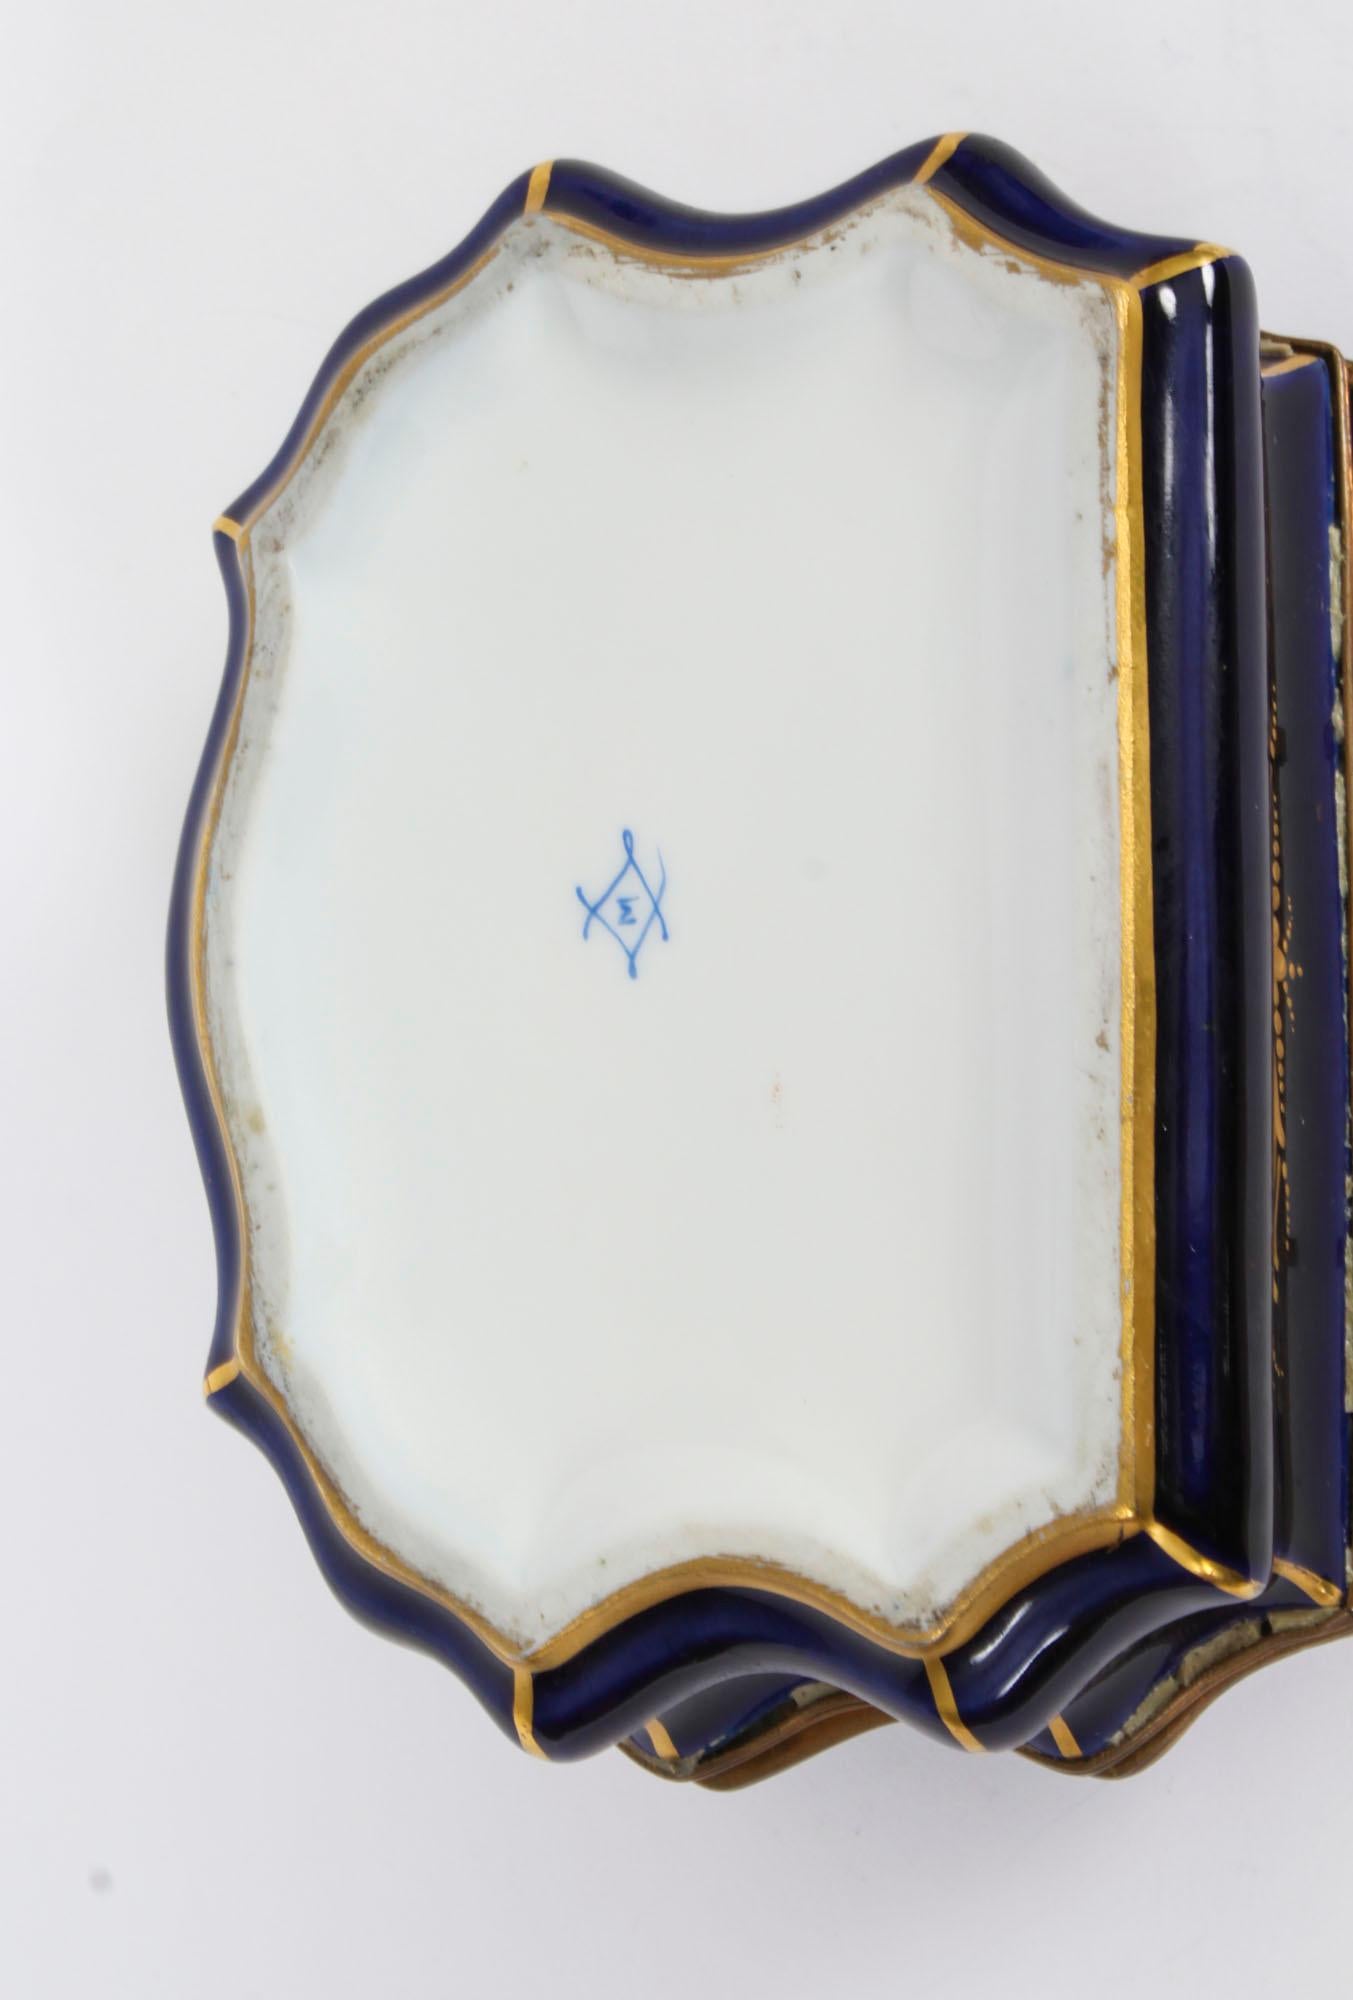 Antique French Sevres Cobalt Blue Porcelain Casket 19th Century For Sale 12